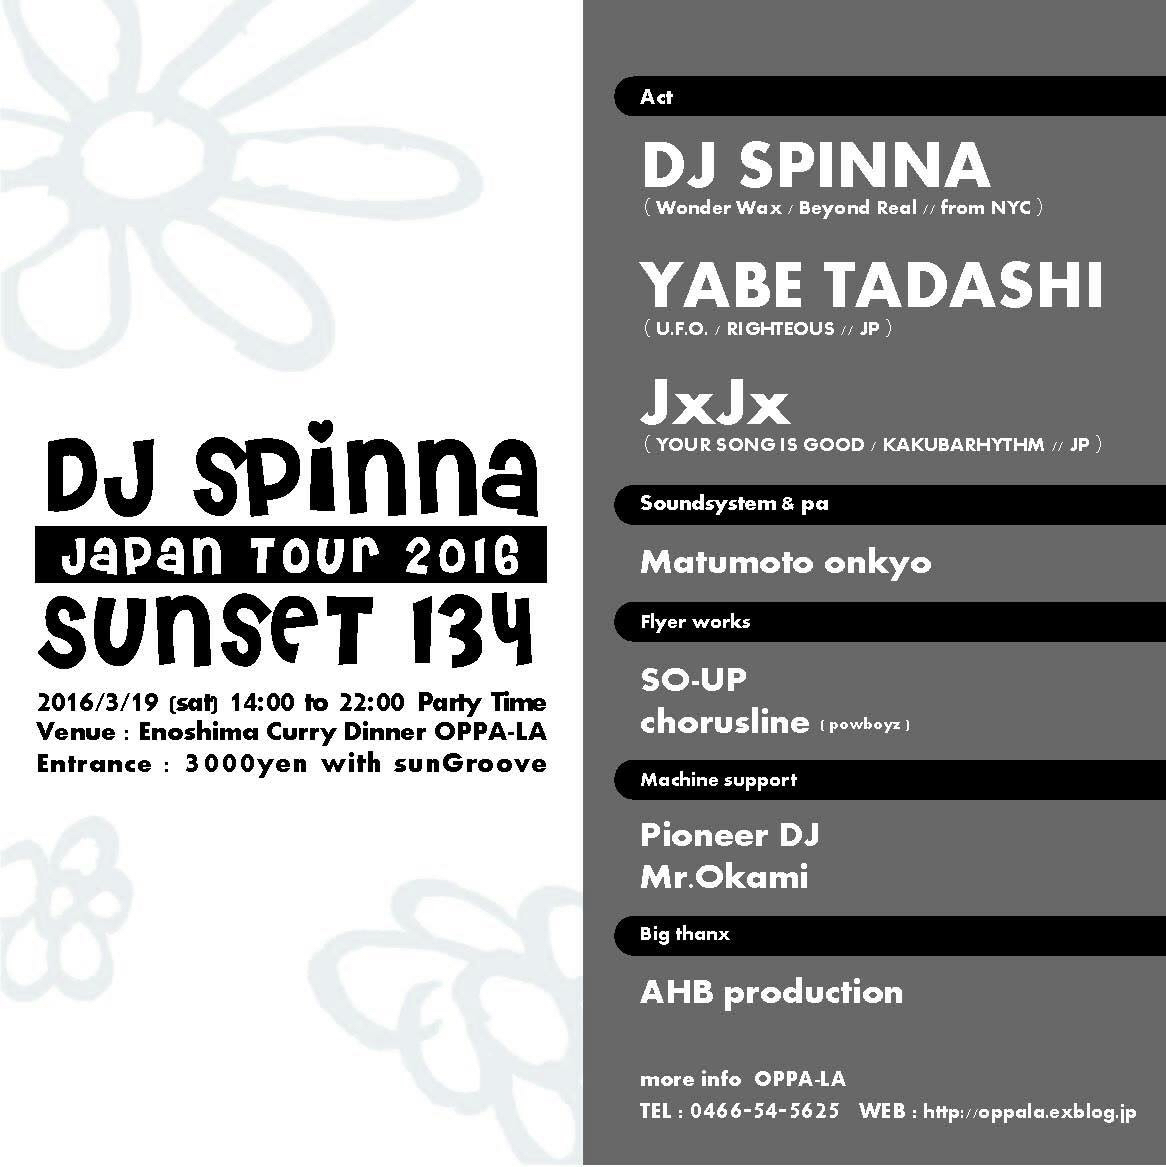 DJ Spinna Jpan Tour 2016が決定‼️江の島オッパーラは3/19 DJ Spinna SUNSET 134&#127796;&#127796;&#127796;_d0106911_18051117.jpg